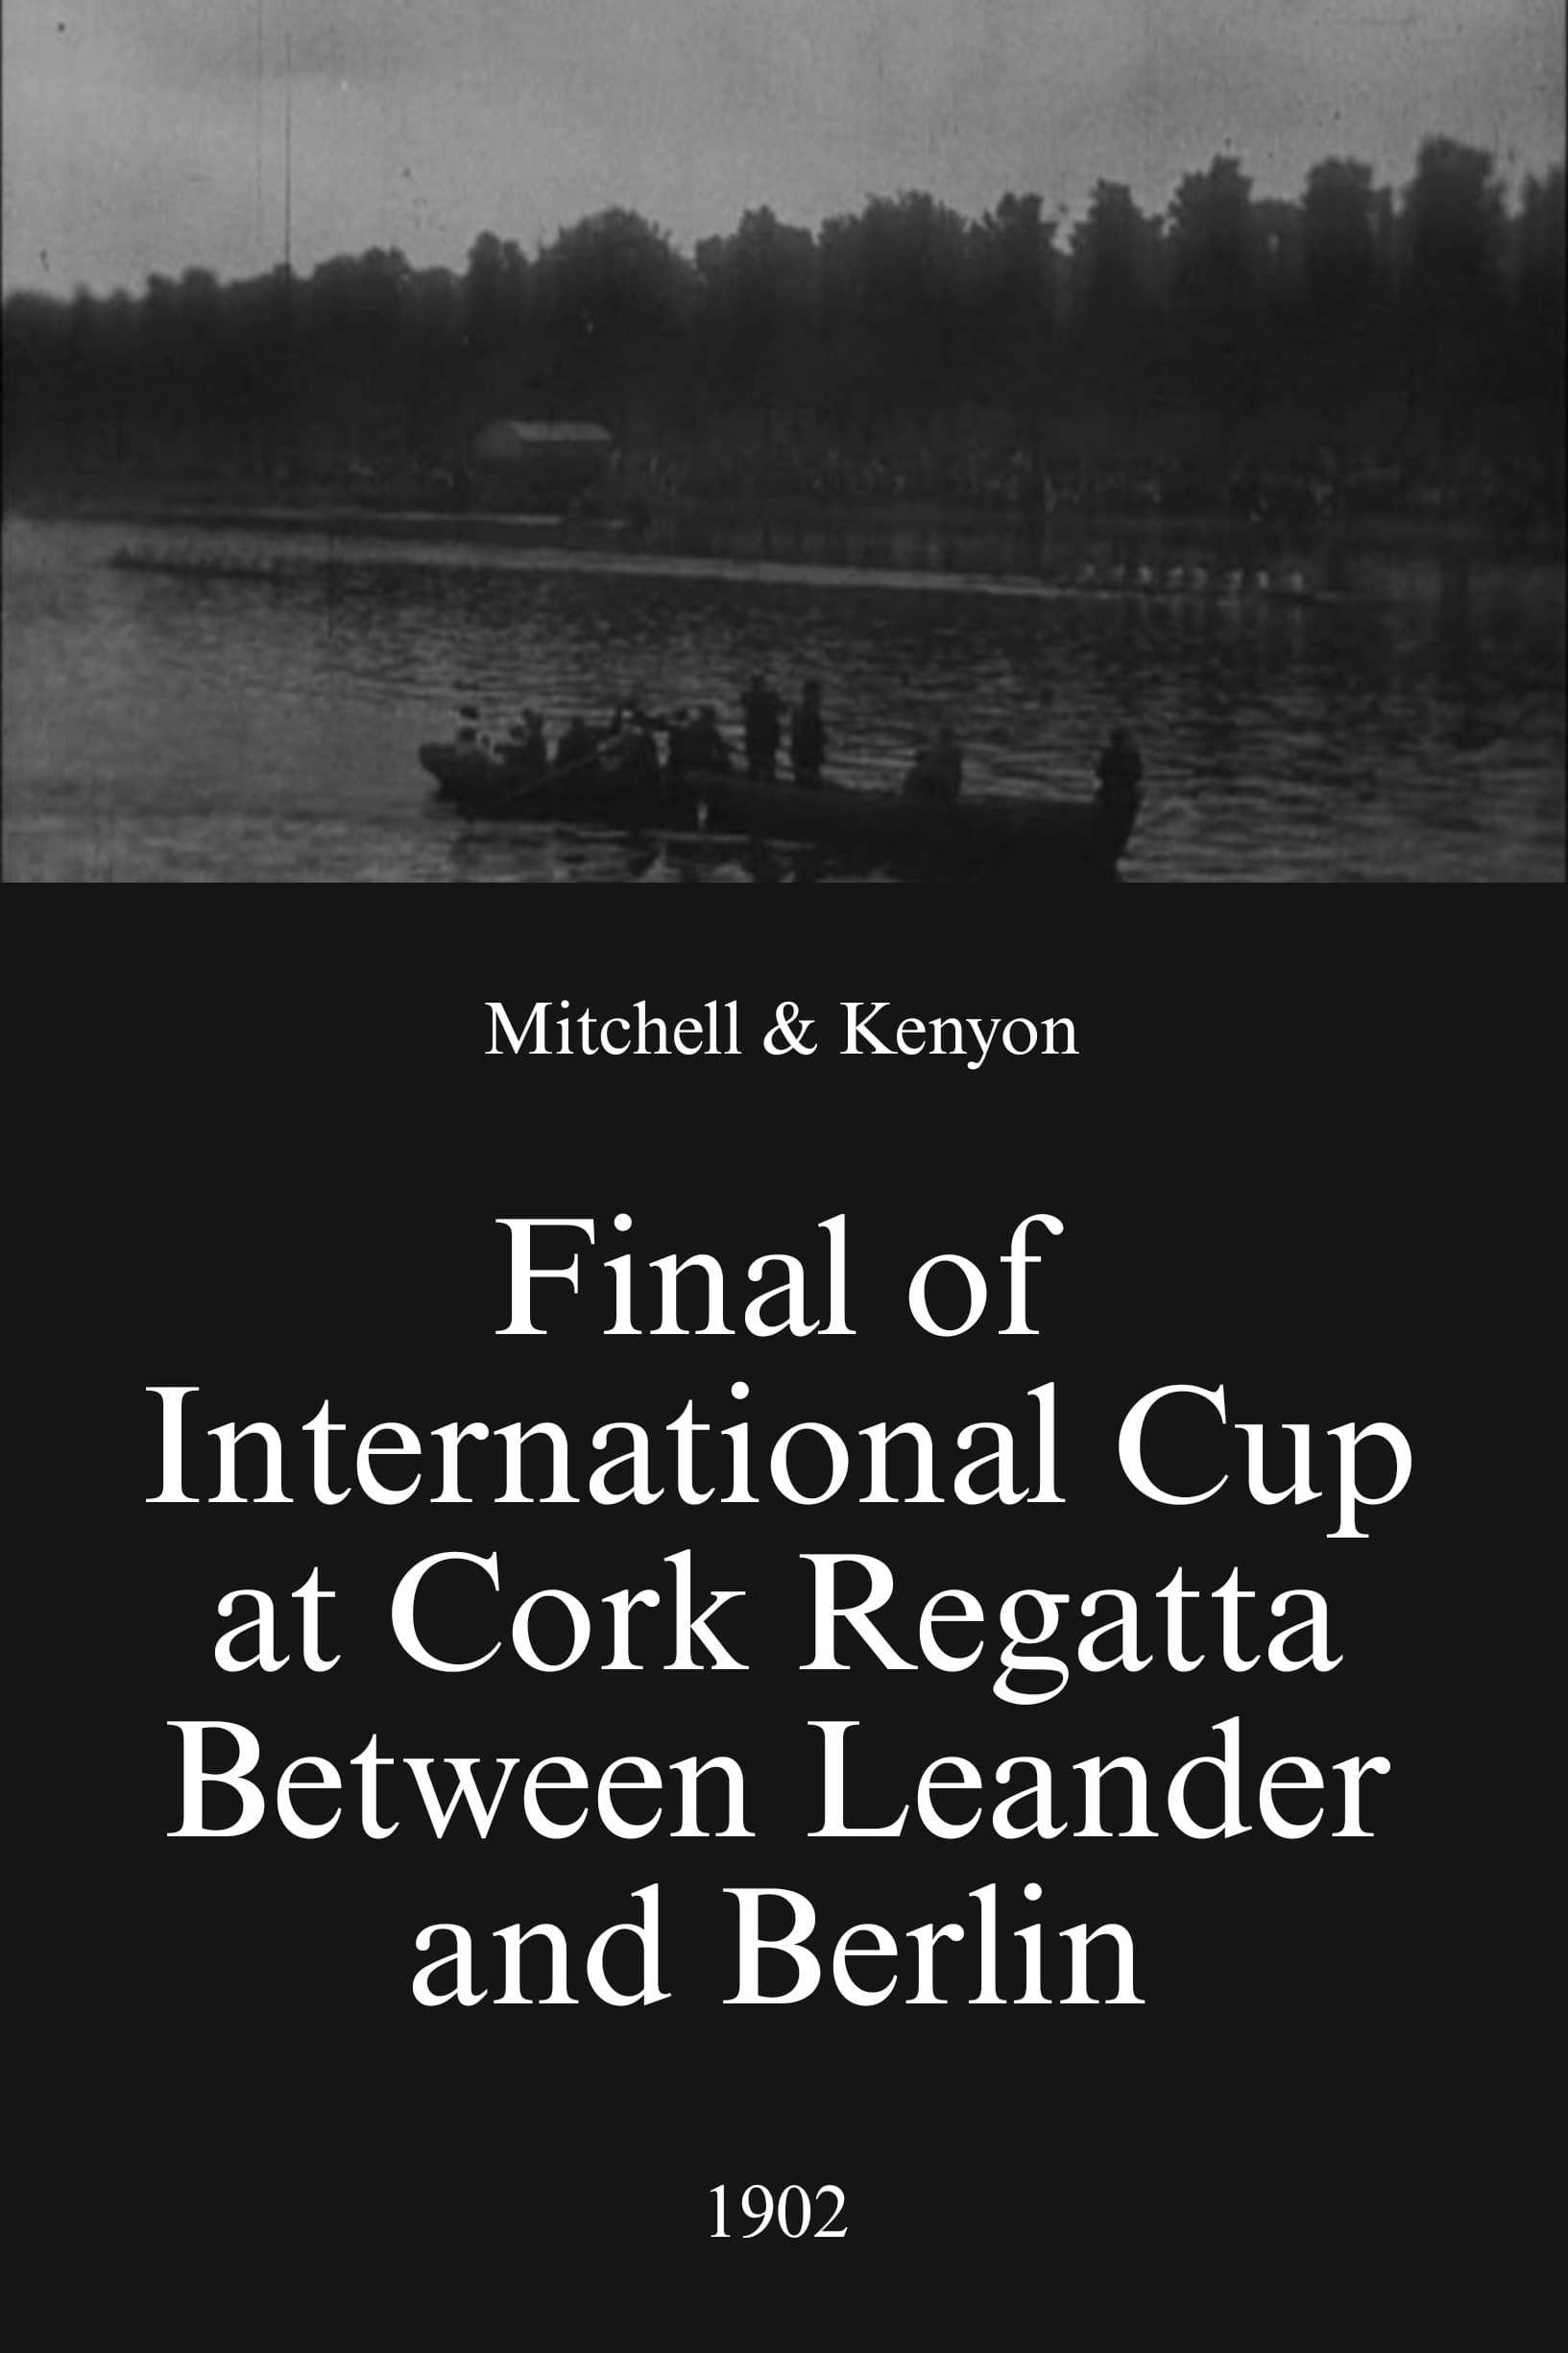 Final of International Cup at Cork Regatta Between Leander and Berlin